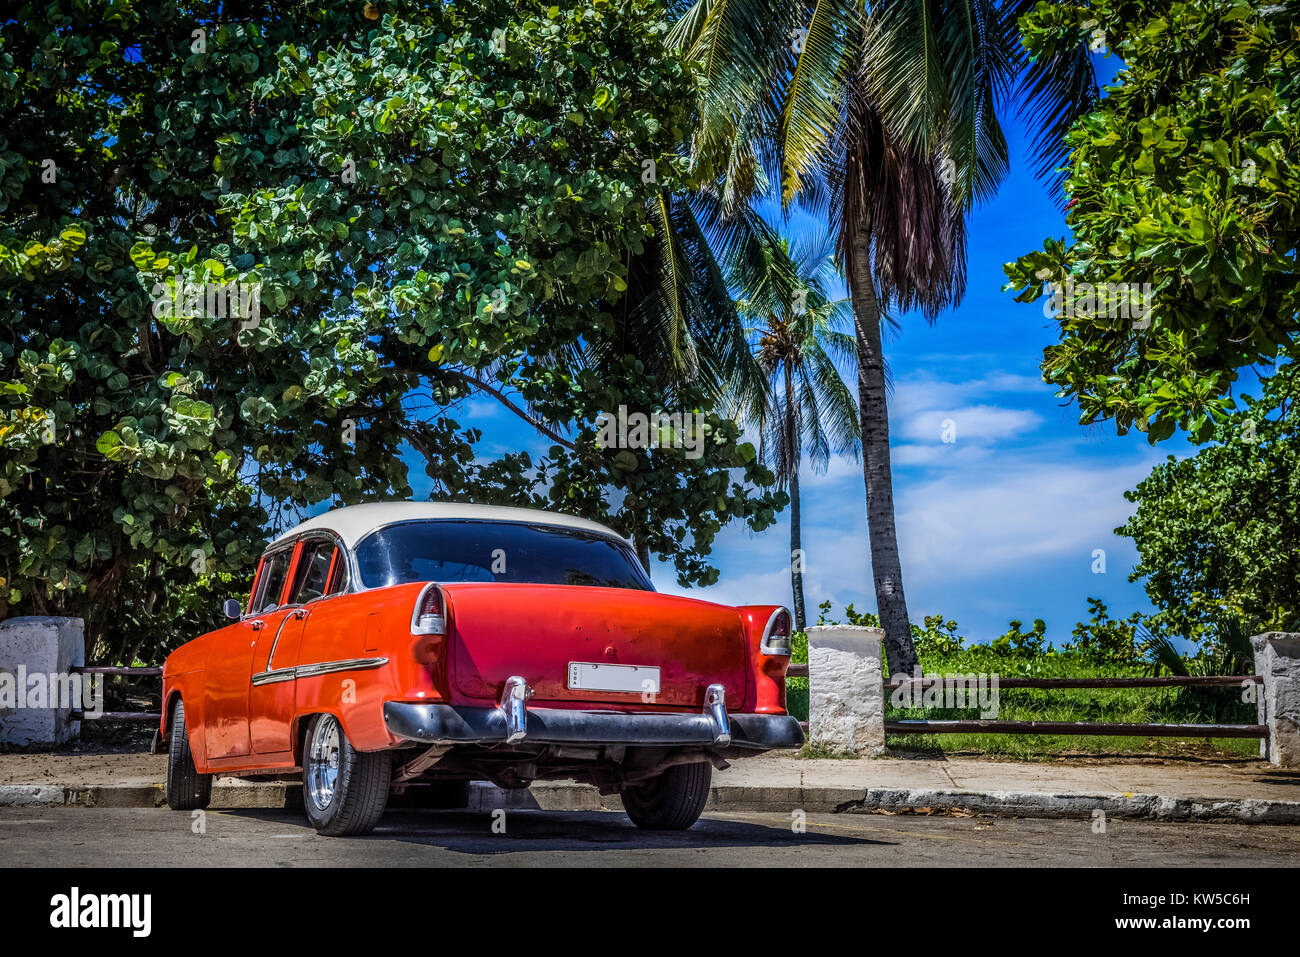 Amerikanischer rot weisser Chevrolet Oldtimer parkt am Strand a Varadero Cuba - Serie Cuba Reportage Foto Stock